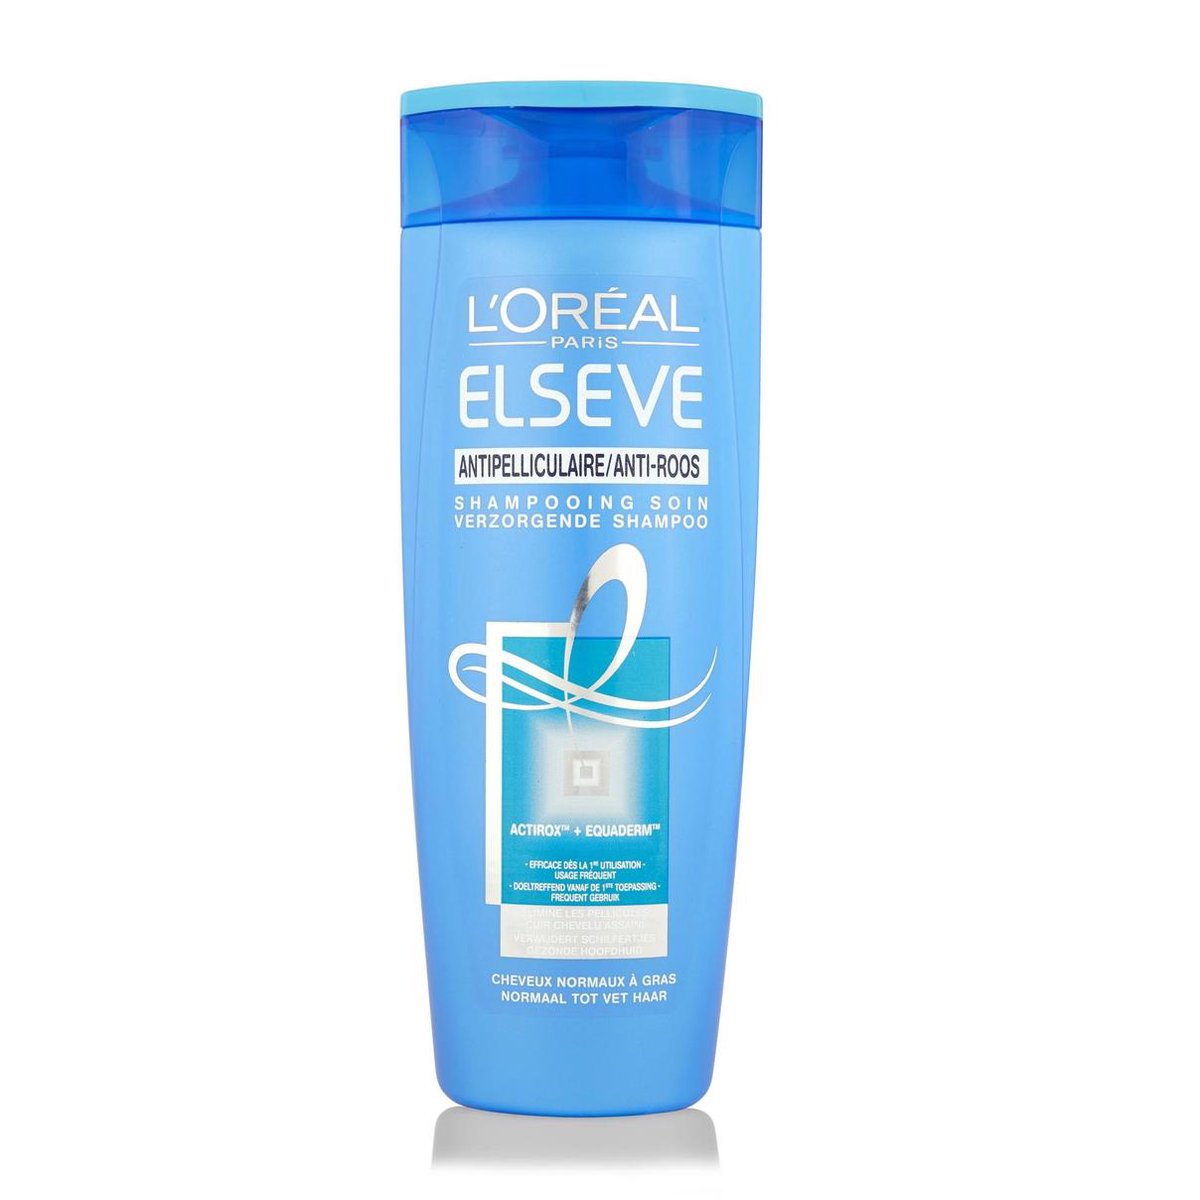 L'Oréal Paris Elvive Actief Selenium S* Verzorgende Shampoo - 250ml |  bol.com